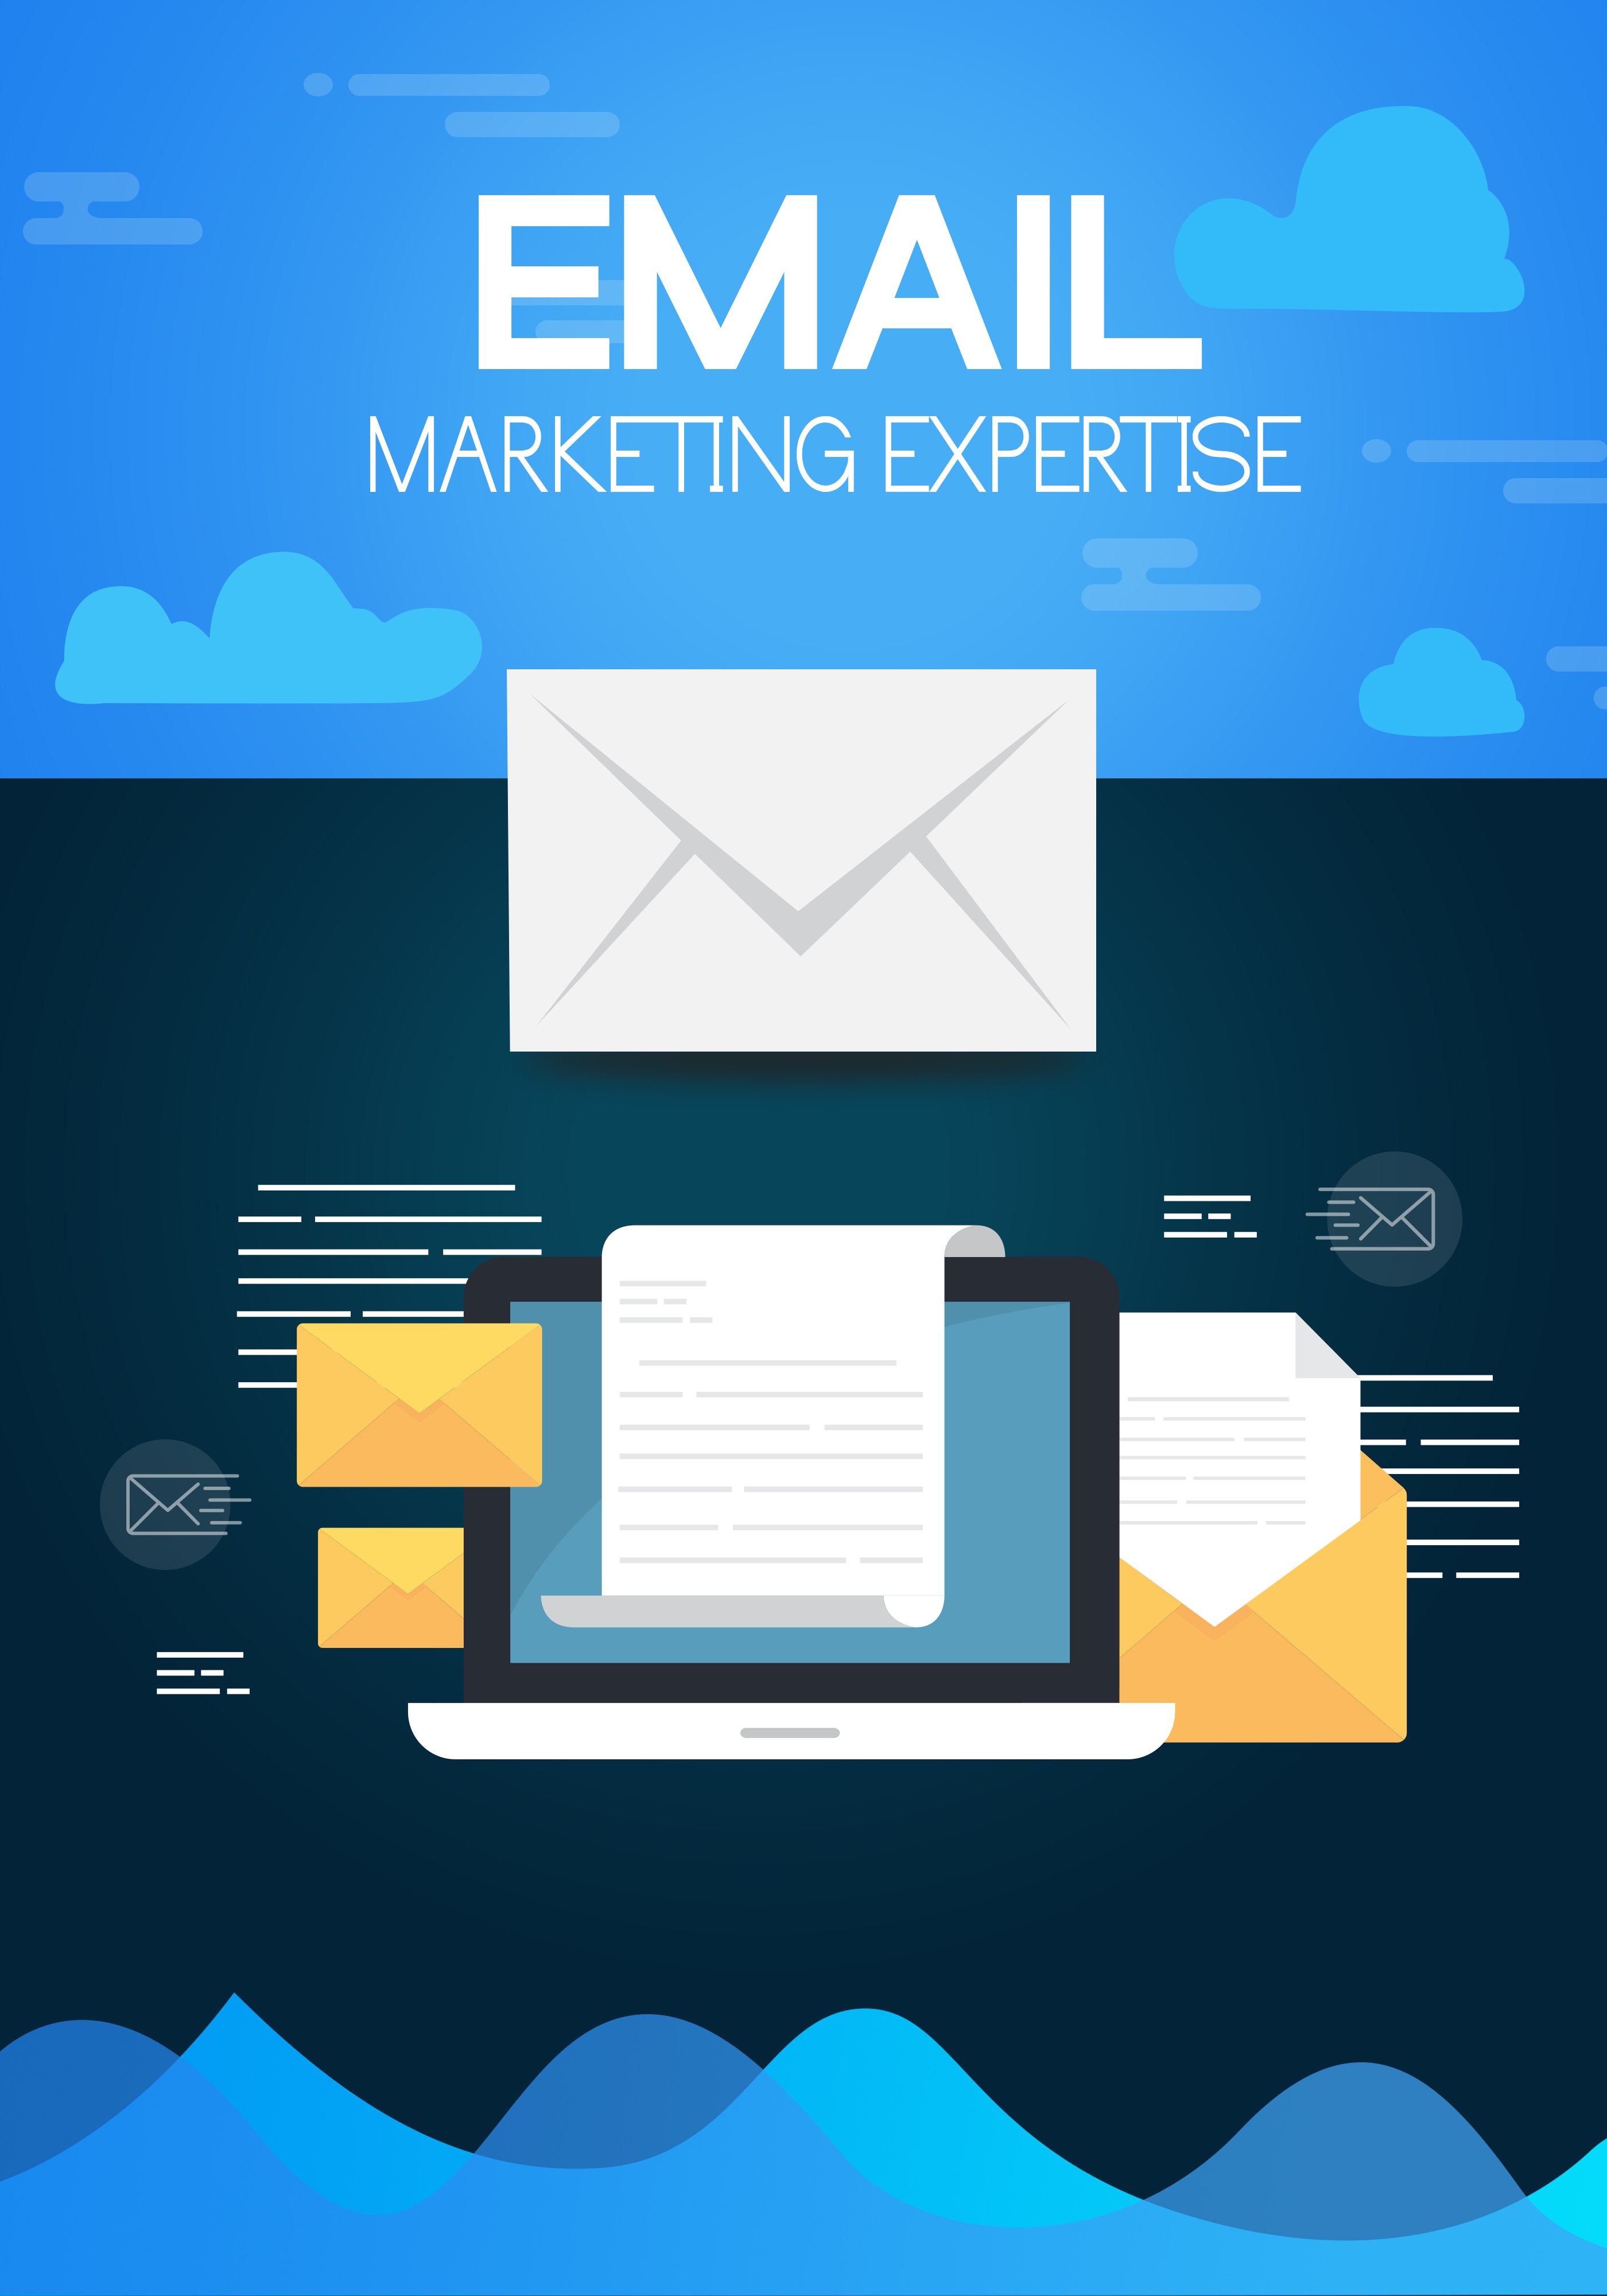 Email Marketing Expertise